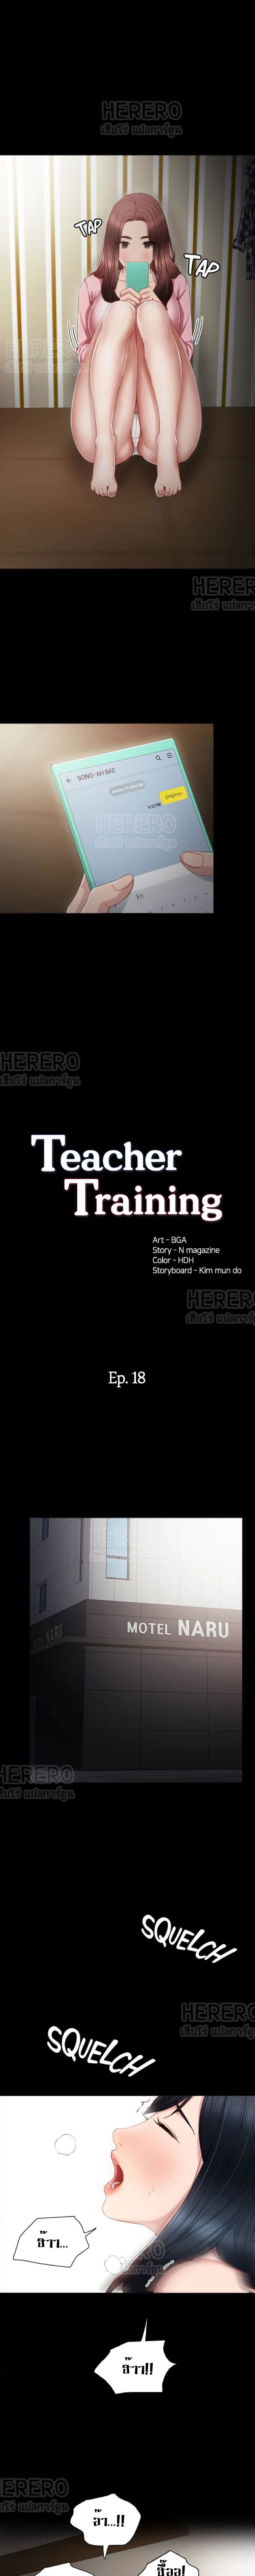 Teaching Practice 18 02